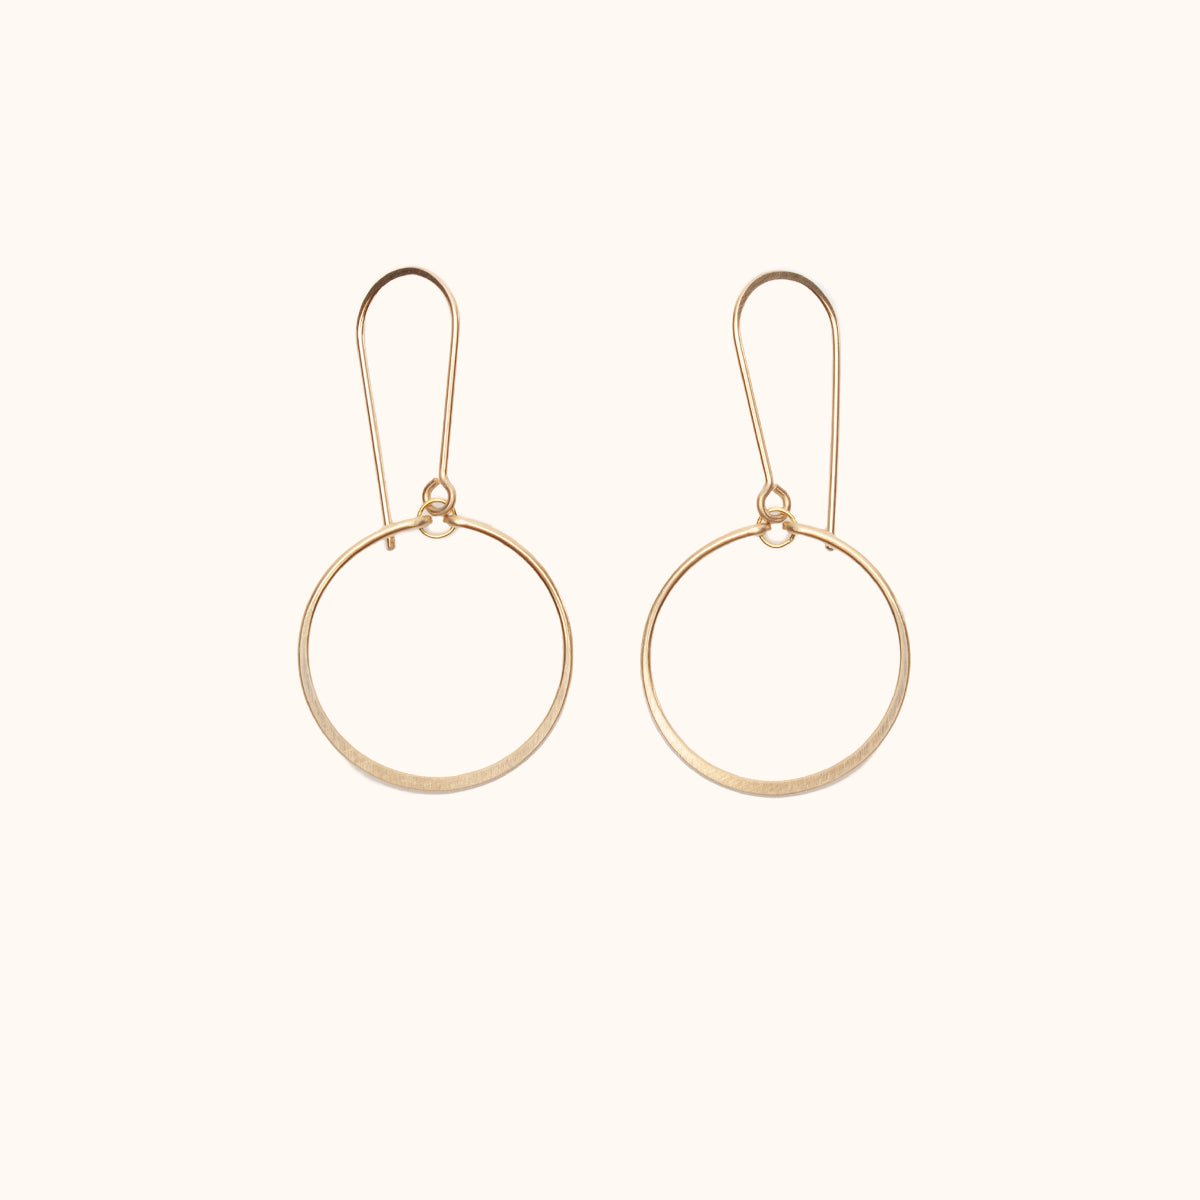 Single Circle Earrings in Gold